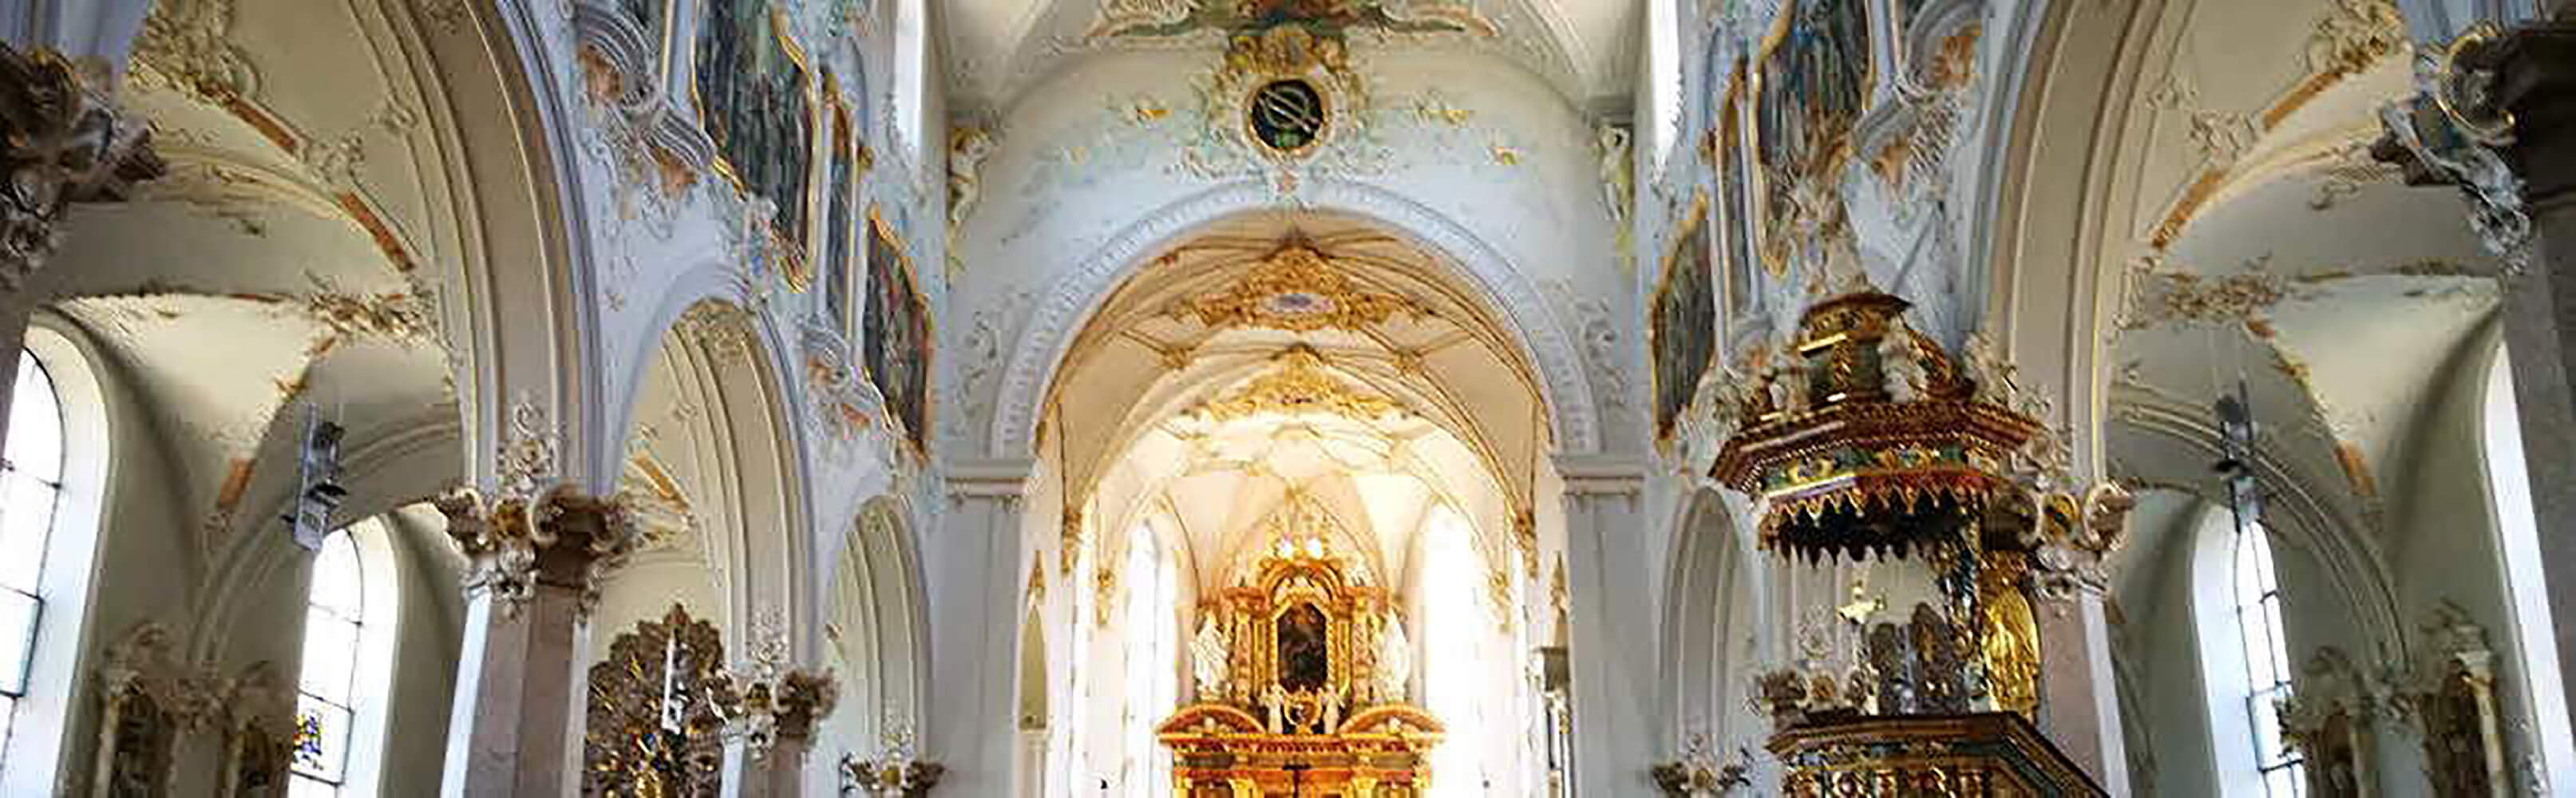 Kloster Mariastein – Gnadenkapelle Mariastein 1